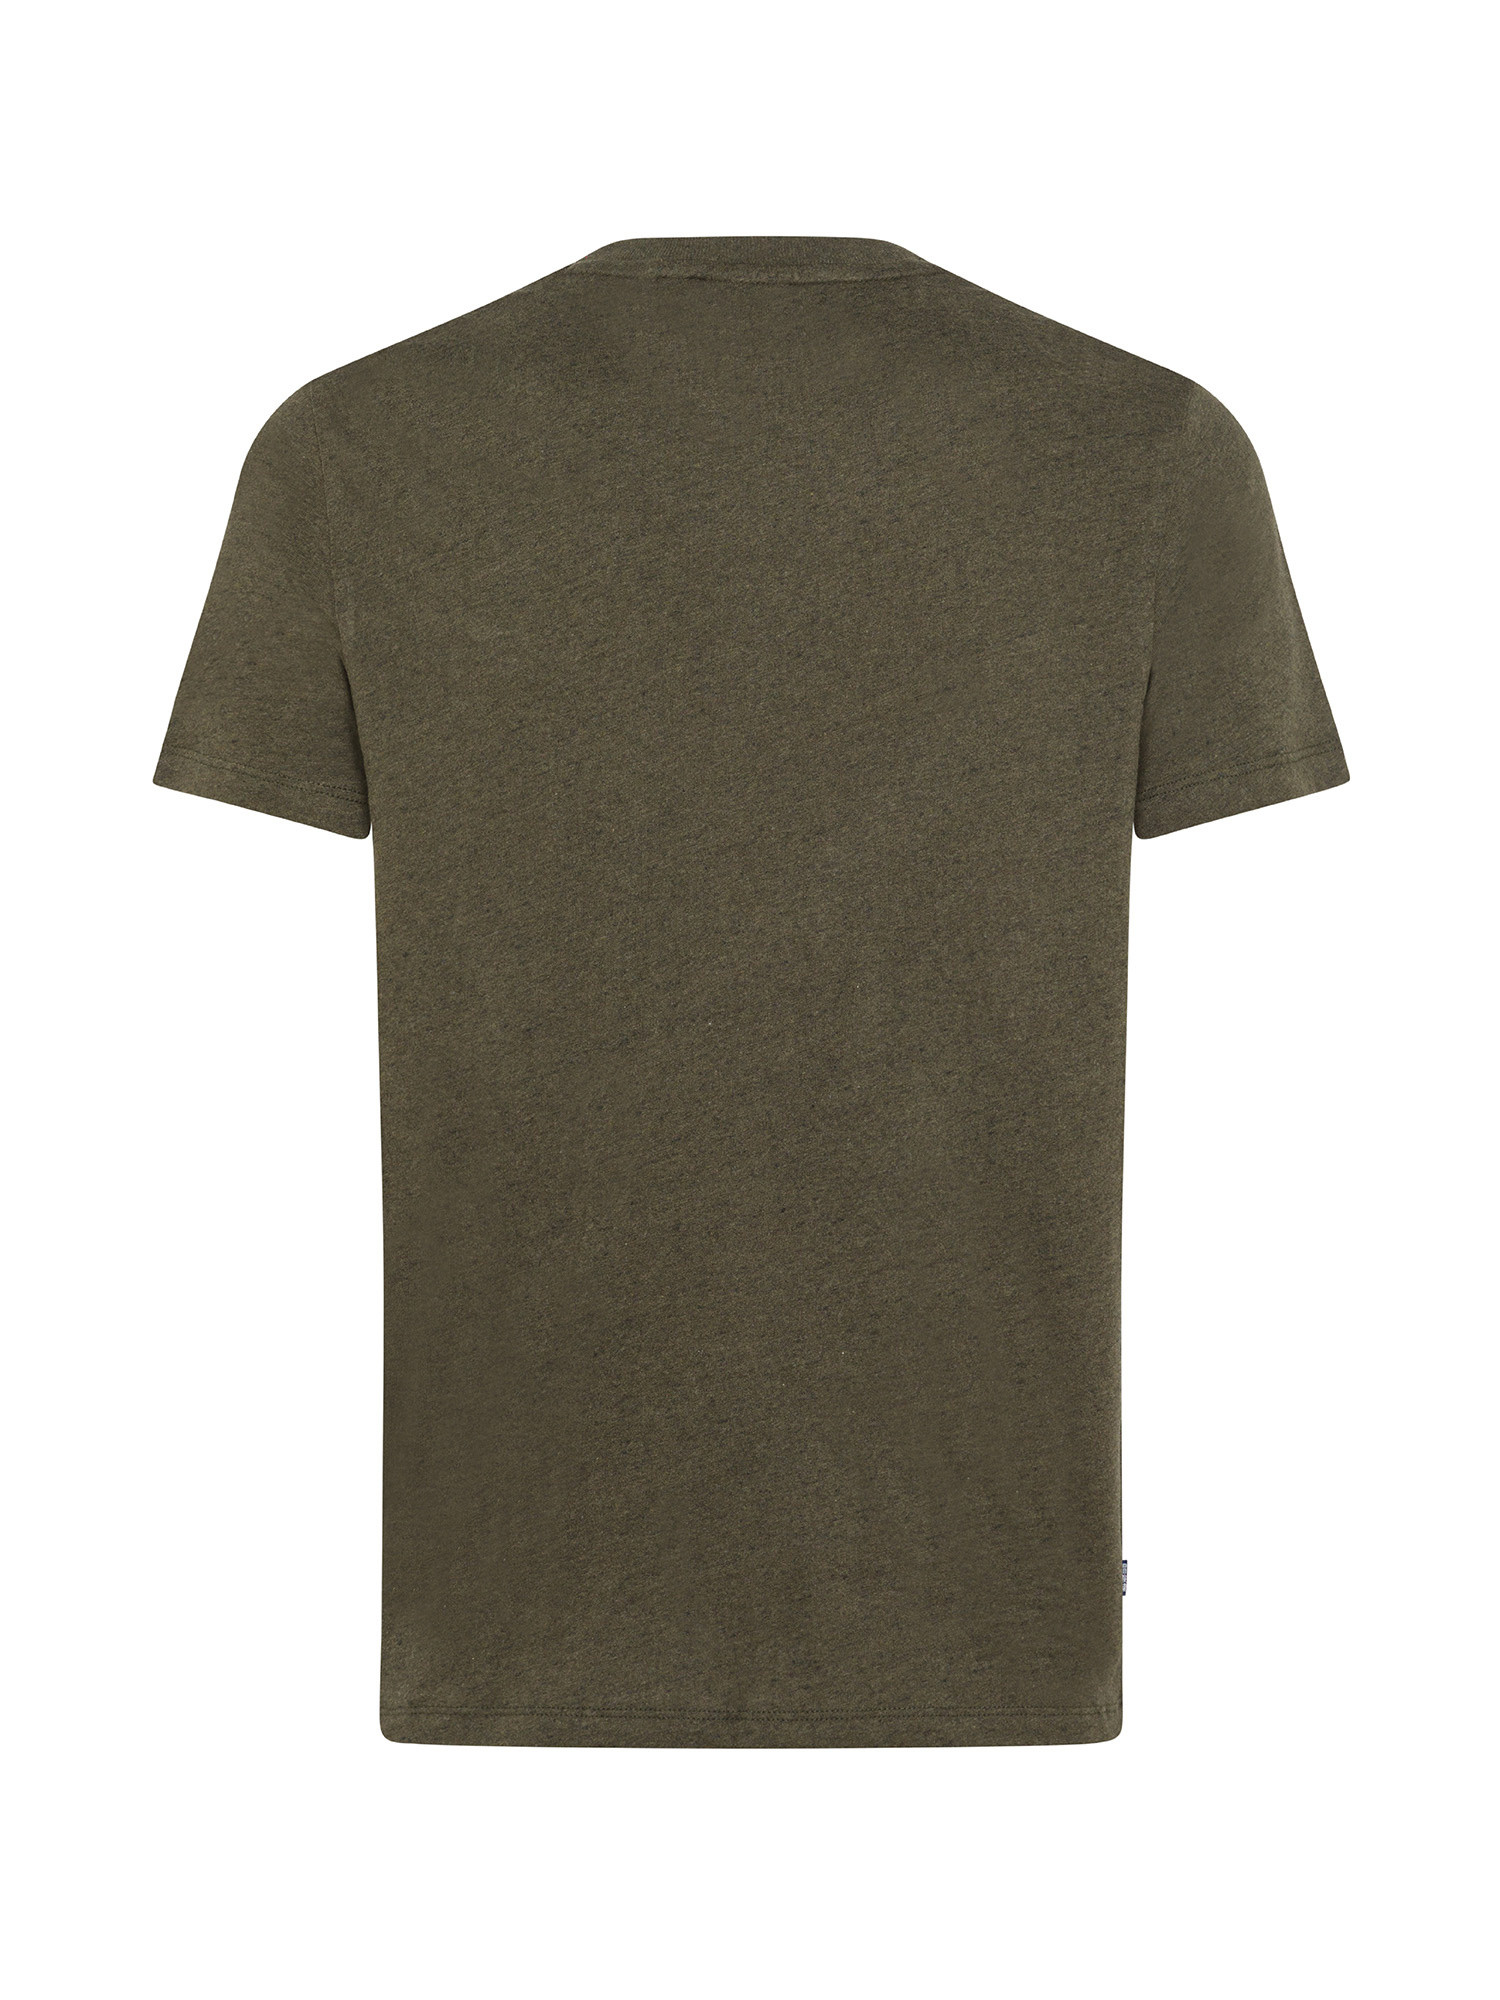 Superdry - T-shirt con logo ricamato, Verde oliva, large image number 1